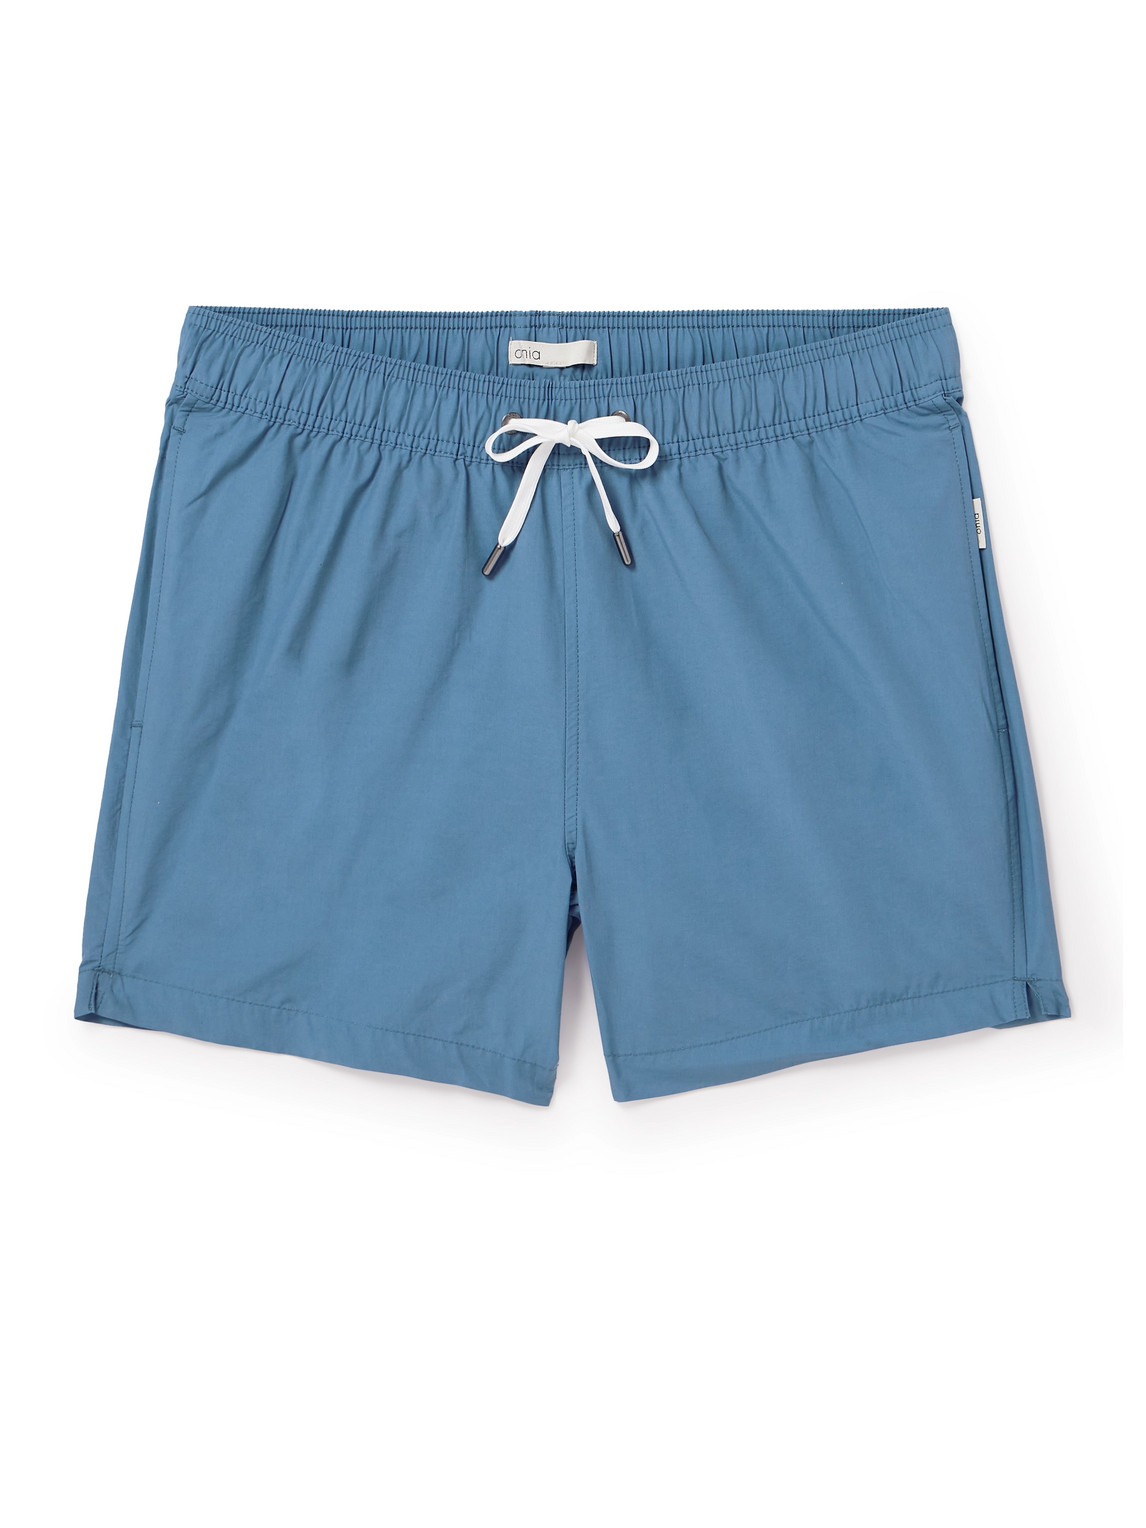 Onia - Charles Straight-Leg Mid-Length Swim Shorts - Men - Blue - S von Onia